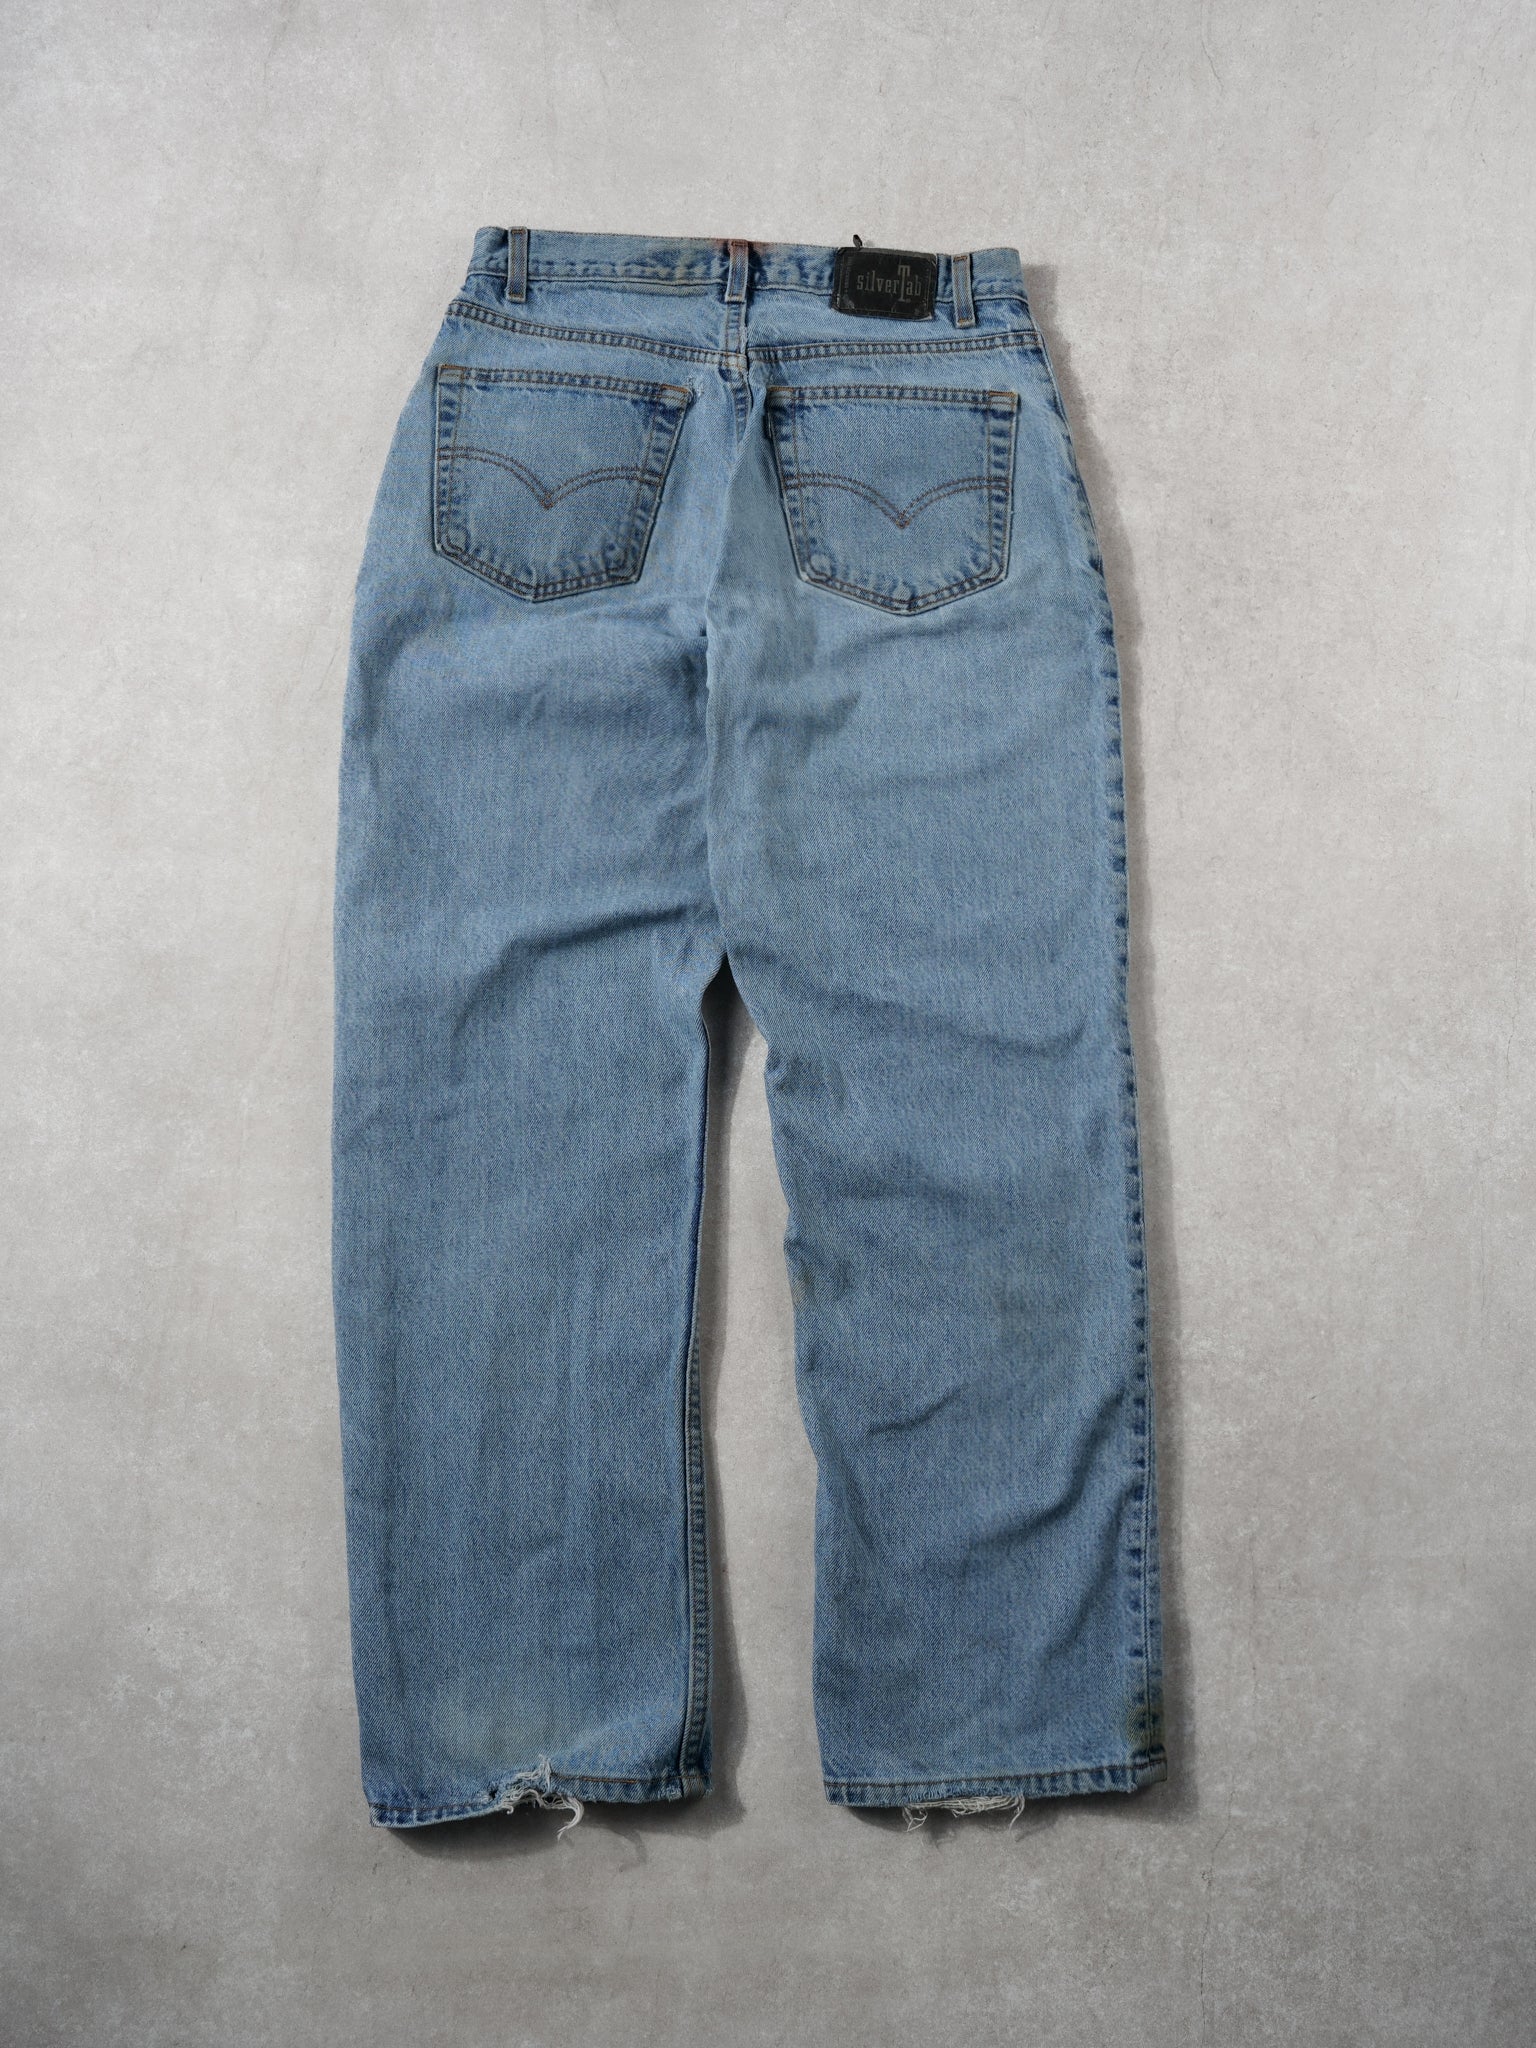 Vintage 90s Light Blue Silver Tab Levi's  Denim Jeans (30x31)